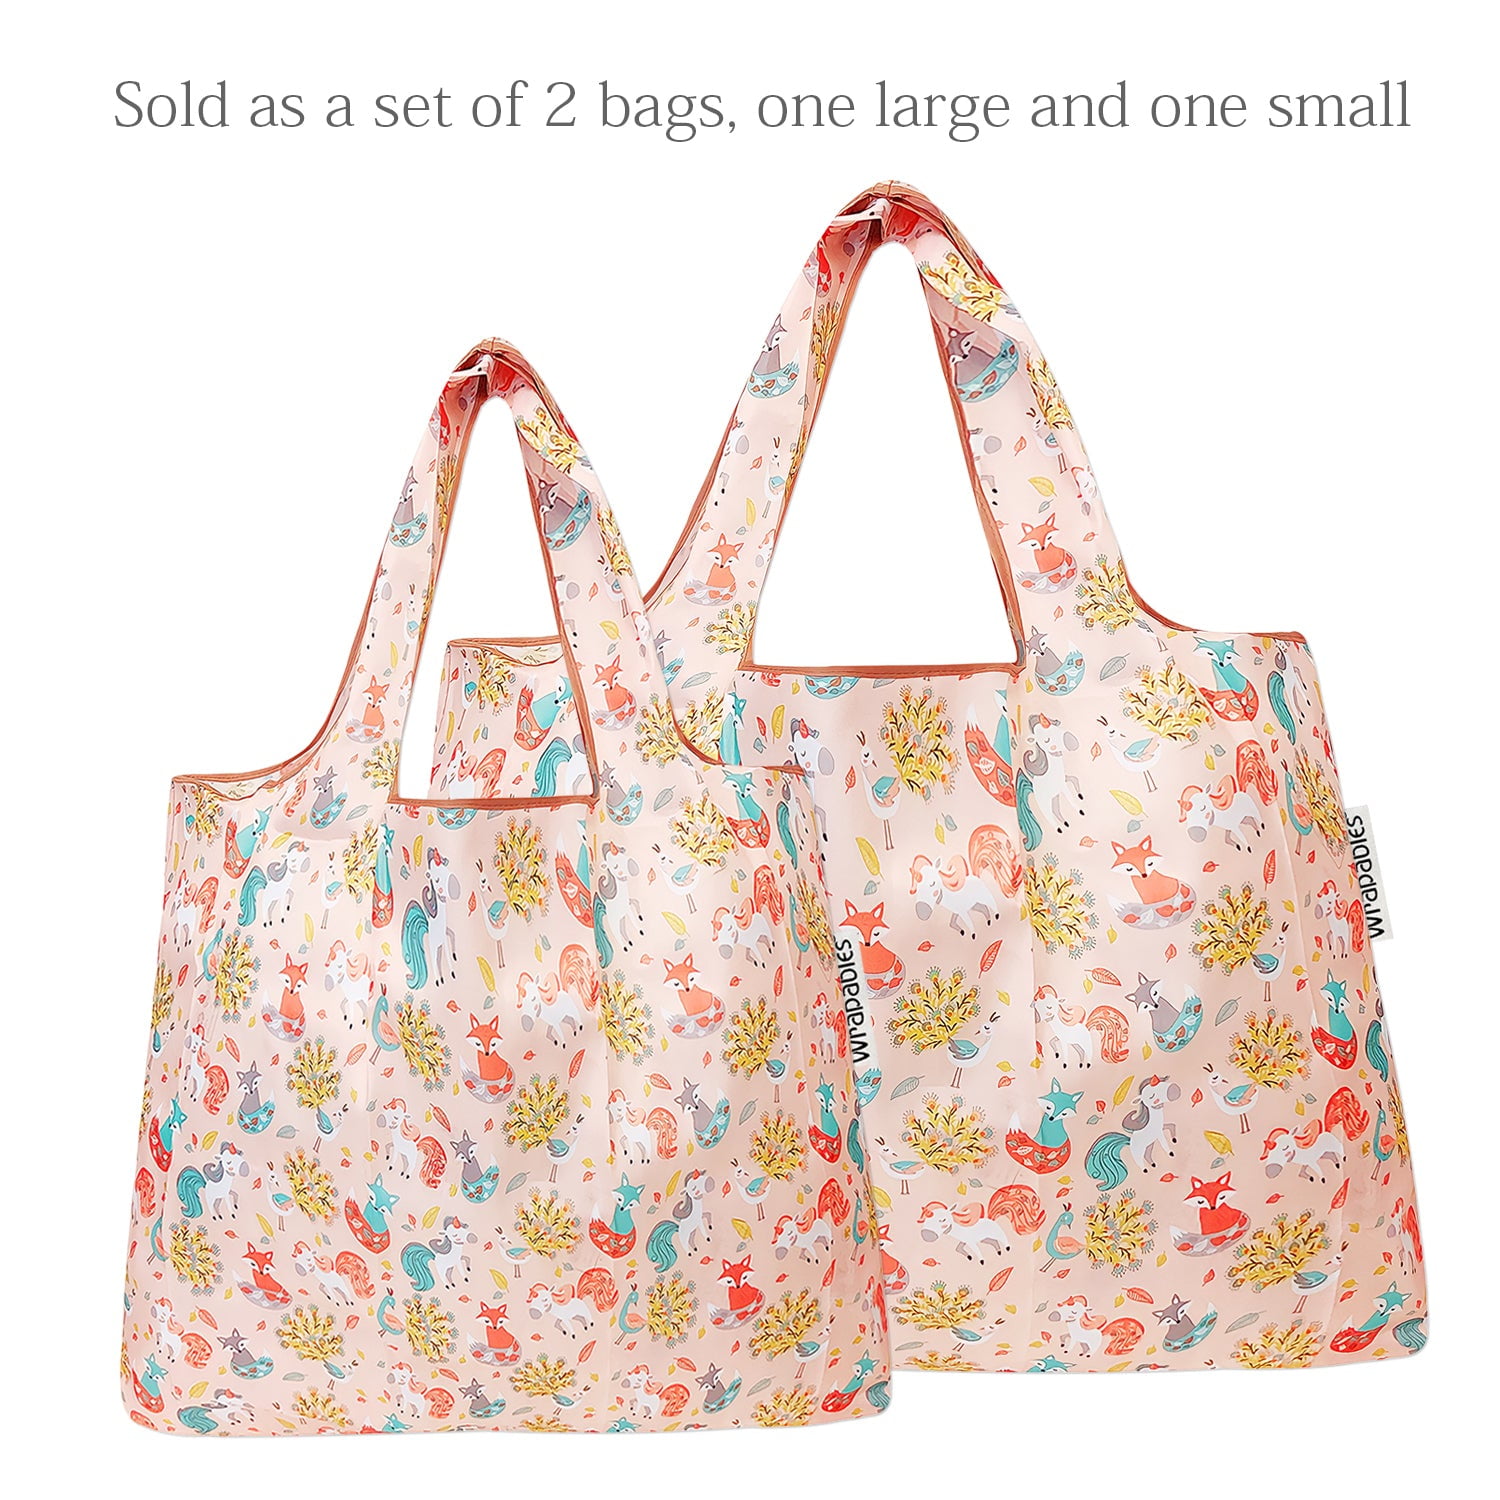 PROJECT & CRAFT BAG Sewing Notions Design Fantastic Storage Bag - Etsy